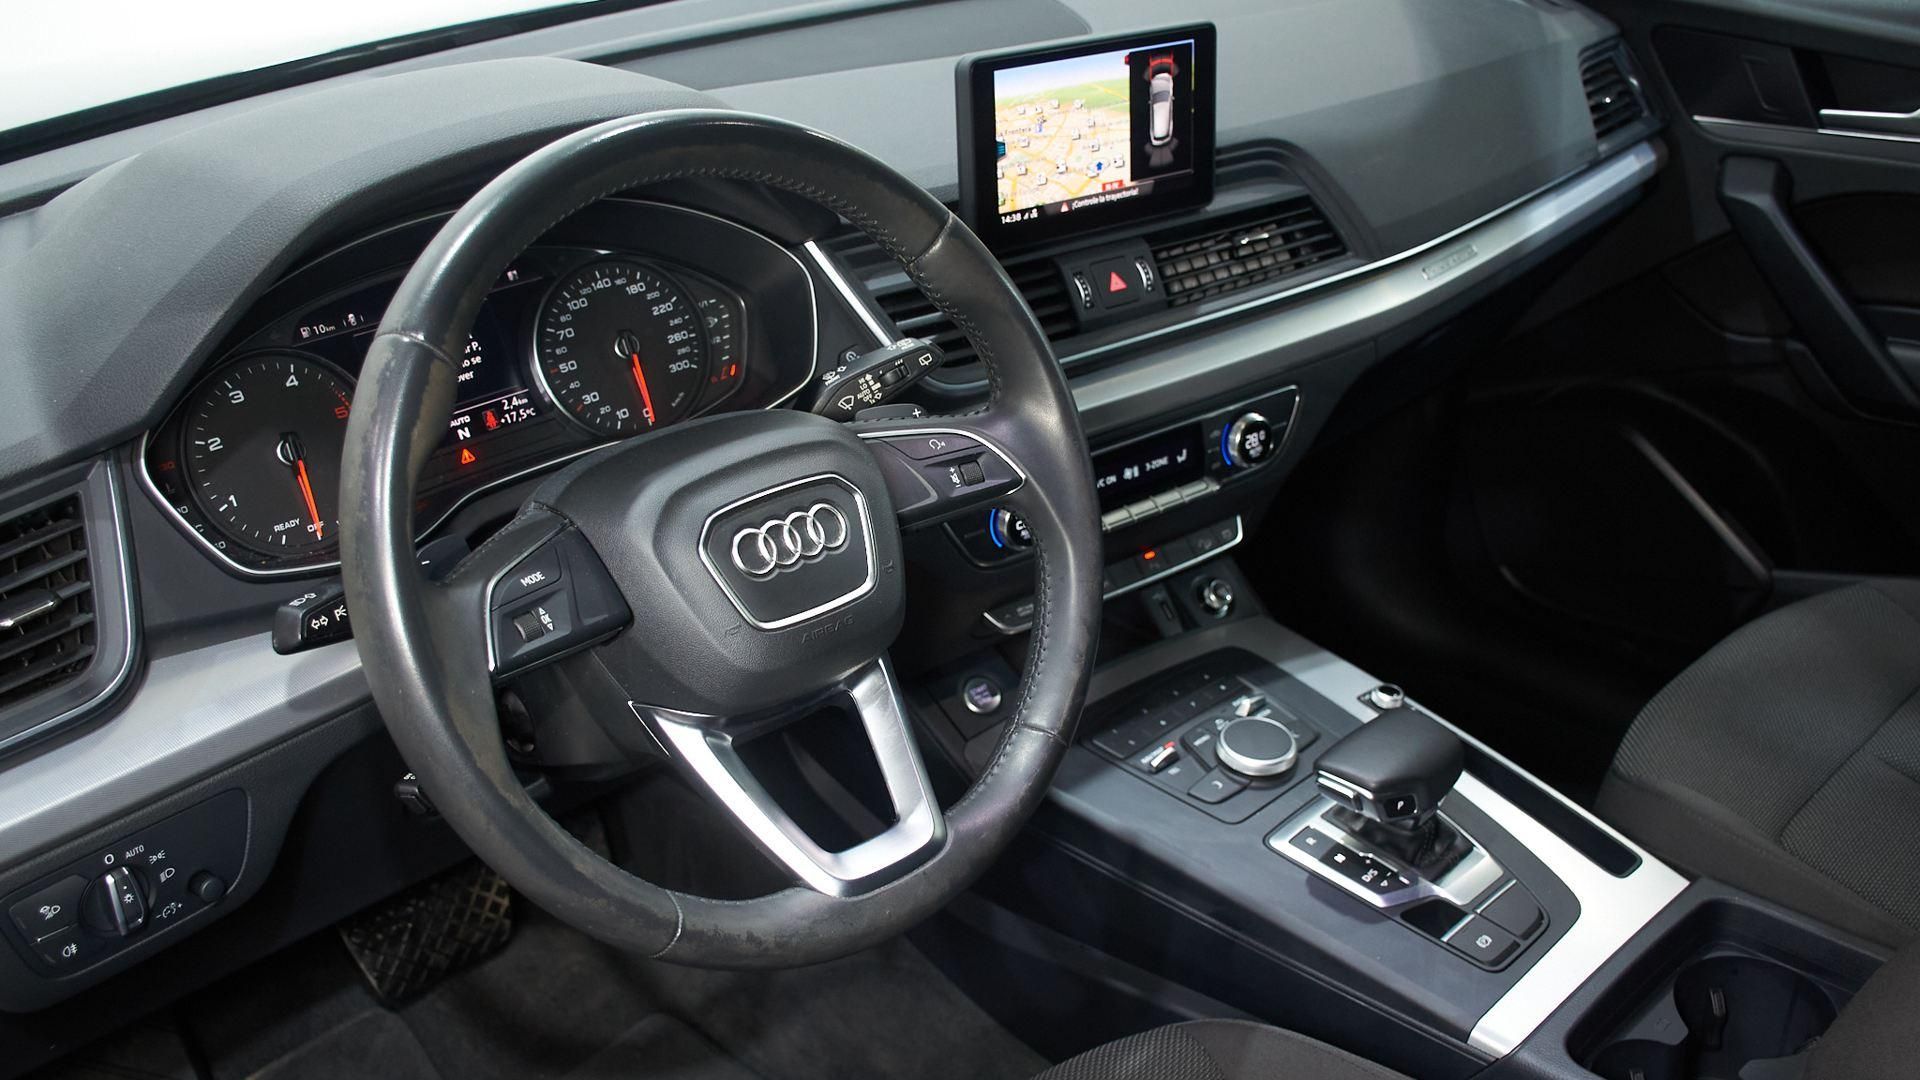 Audi Q5 design 2.0 TDI quattro 120 kW (163 CV) S tronic